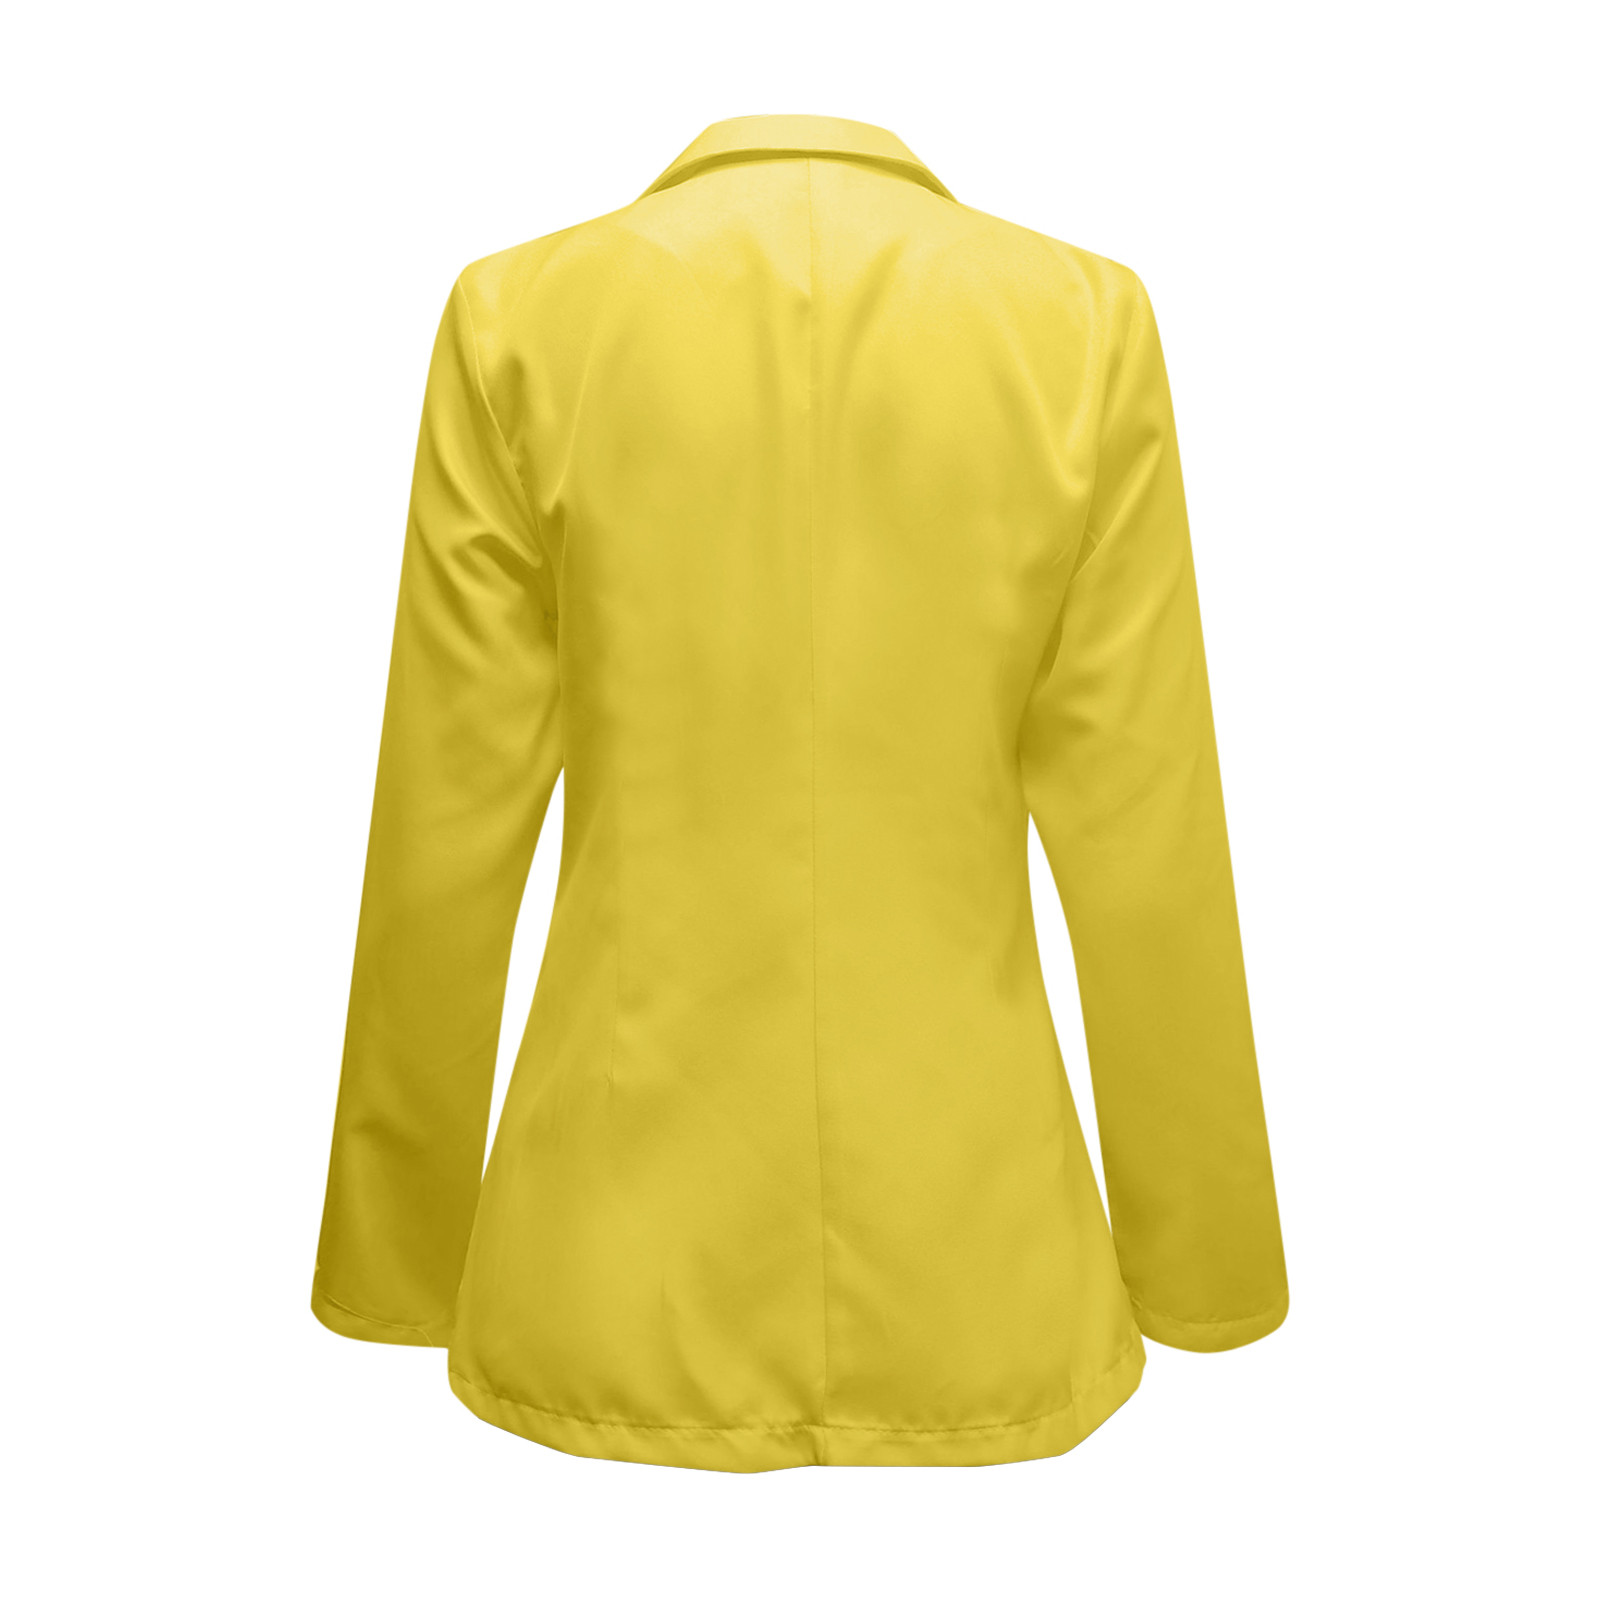 iOPQO blazer jackets for women Women's Casual Light Weight Thin Jacket Slim Coat Long Sleeve Blazer Office Business Coats Jacket Women's Blazers Yellow M - image 5 of 7